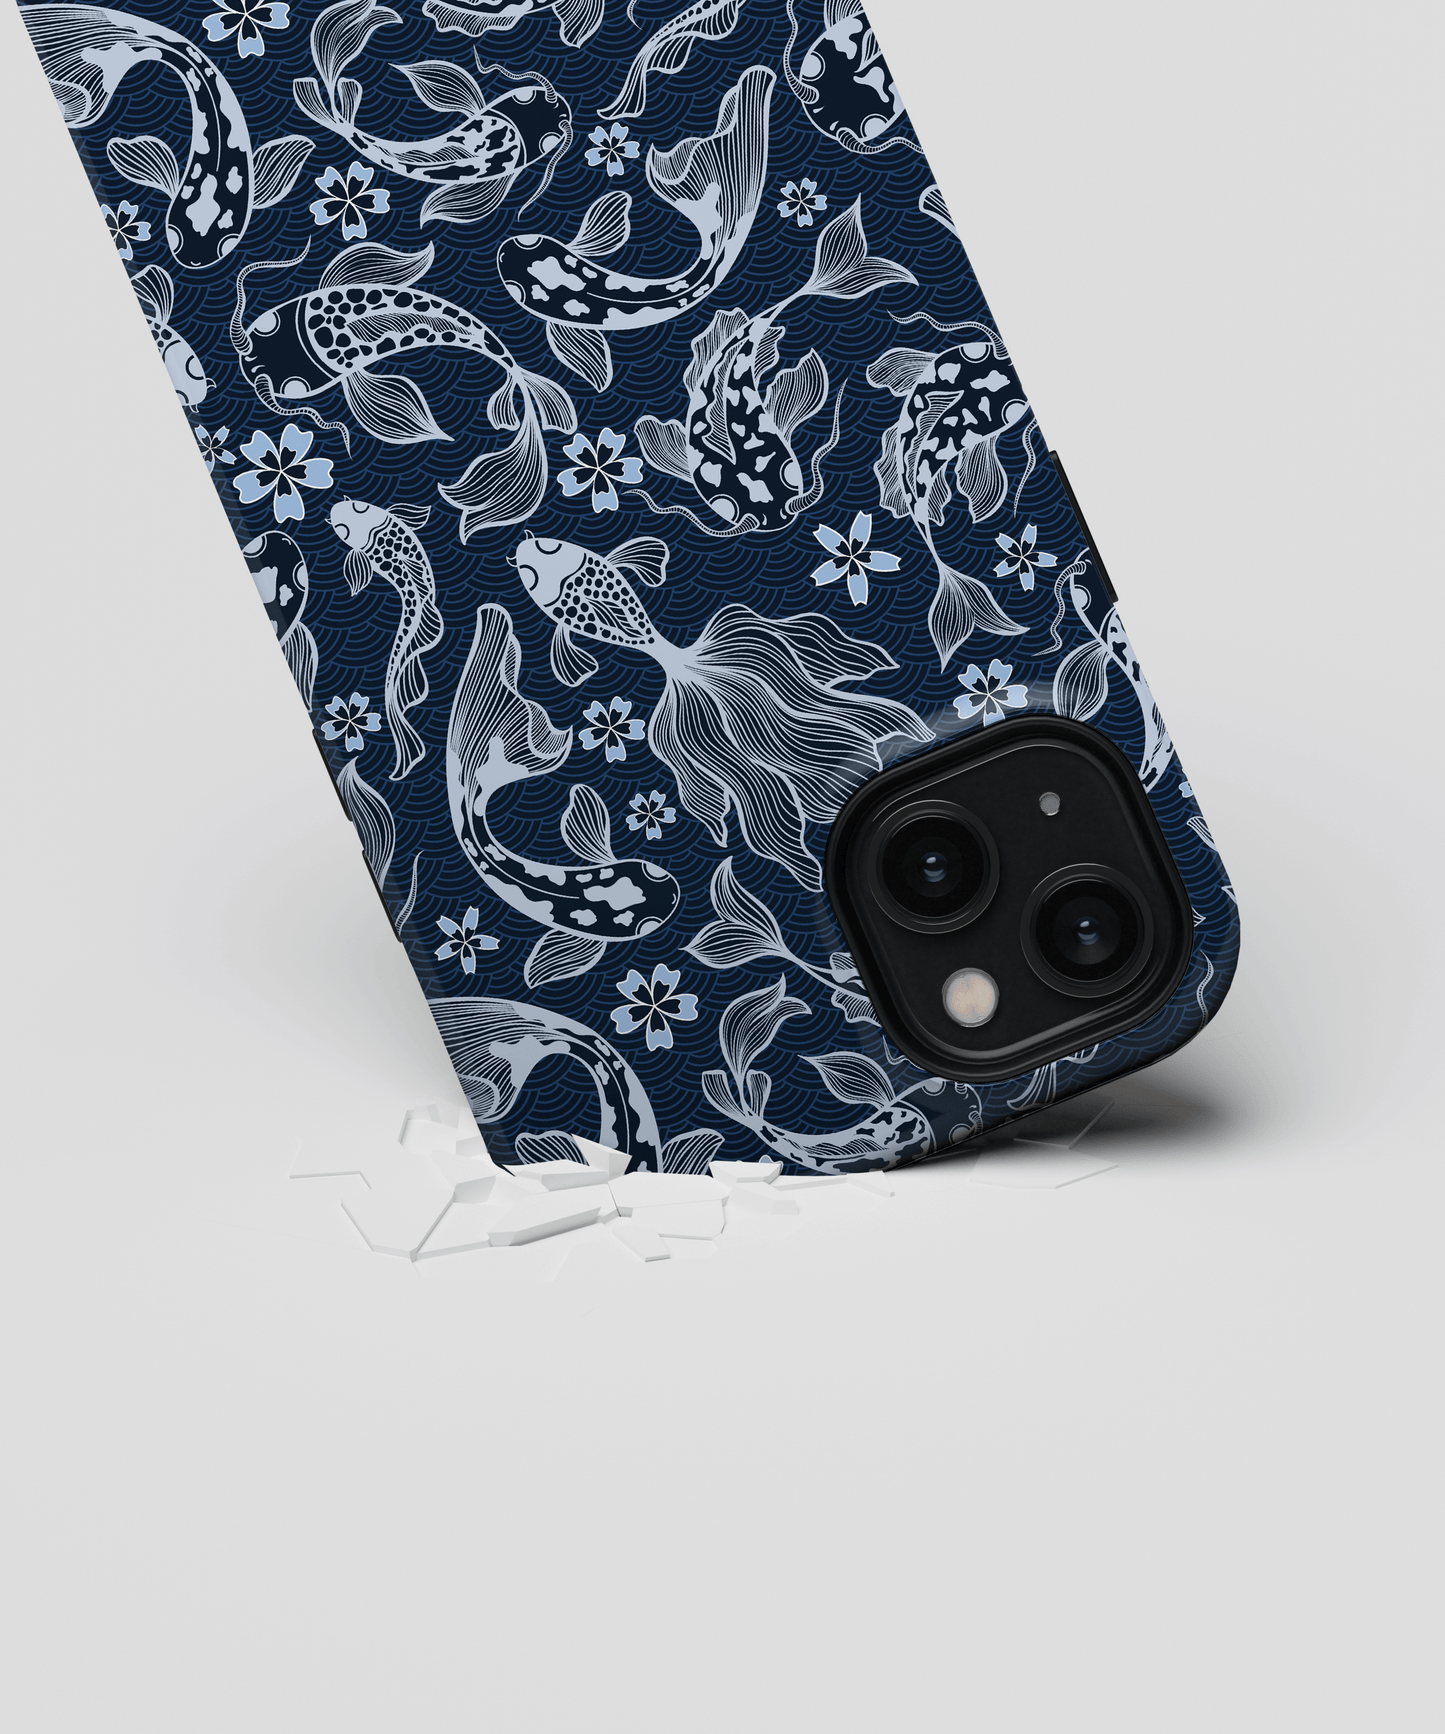 Fishtopia - Samsung Galaxy S20 phone case